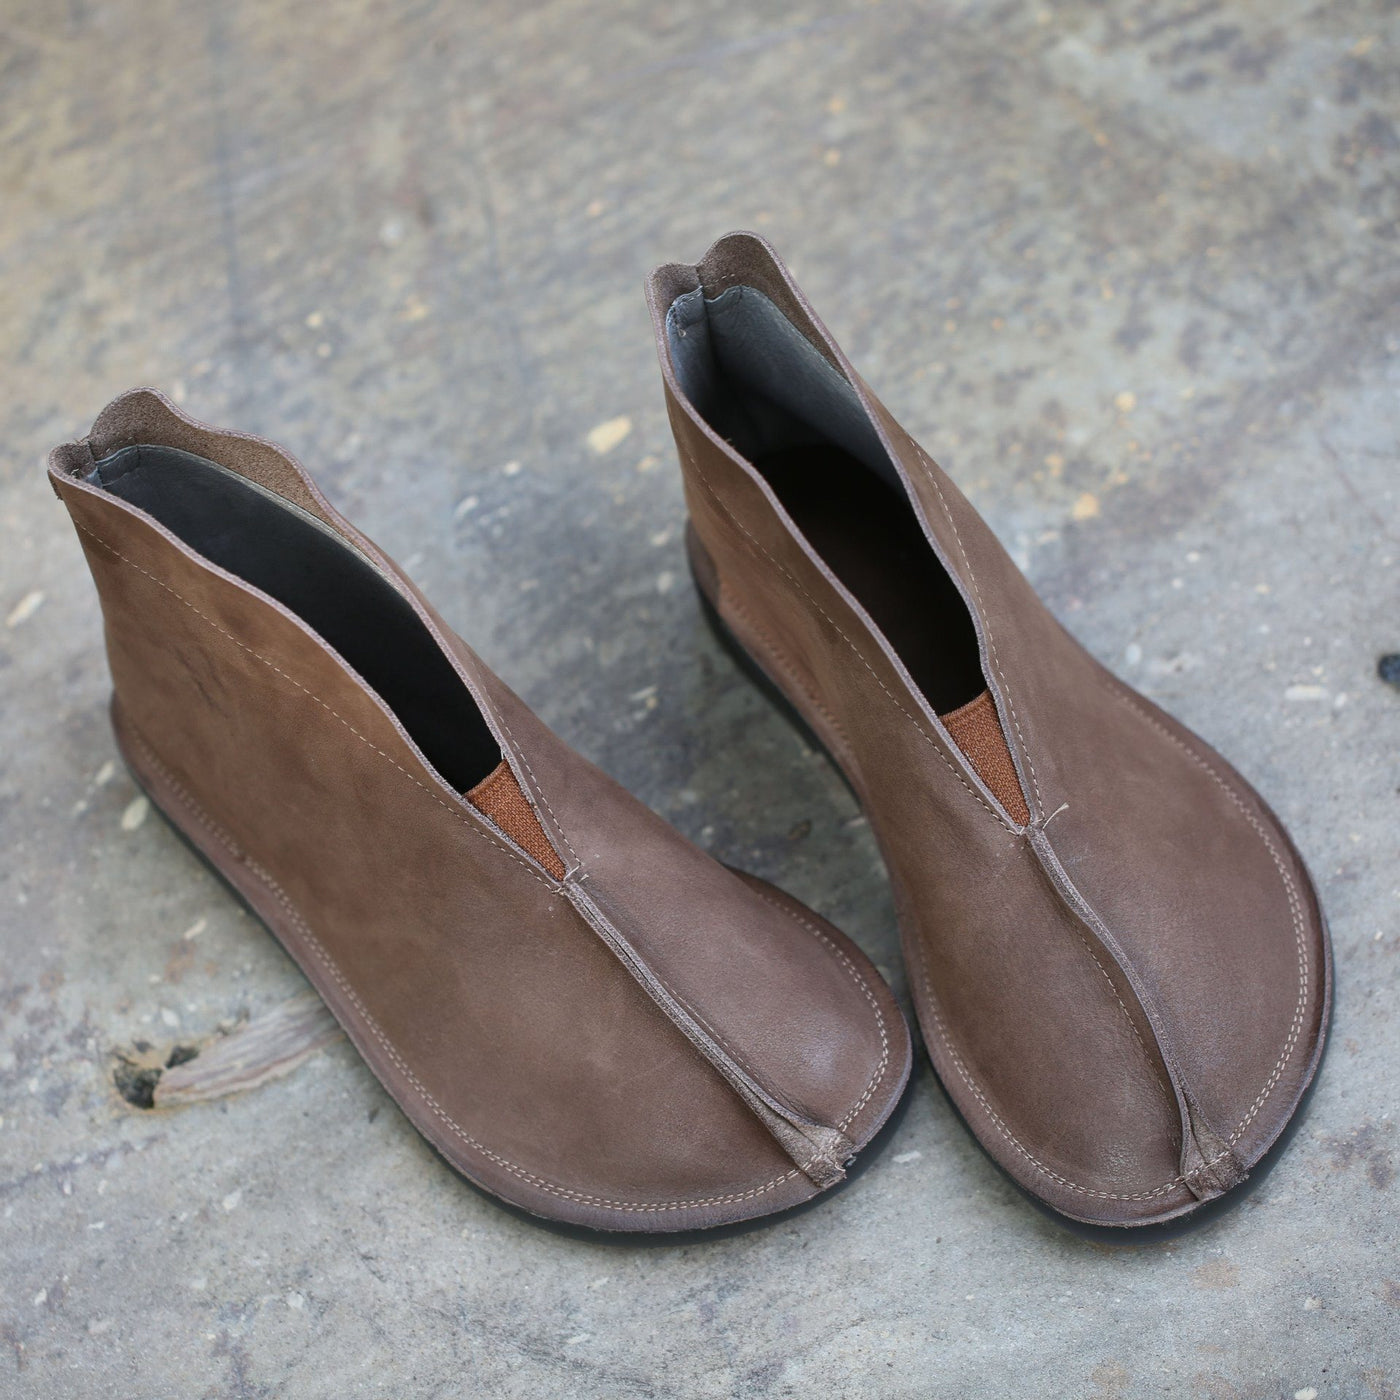 Retro Leather Women's Comfortable Shoes April 2021 New-Arrival 